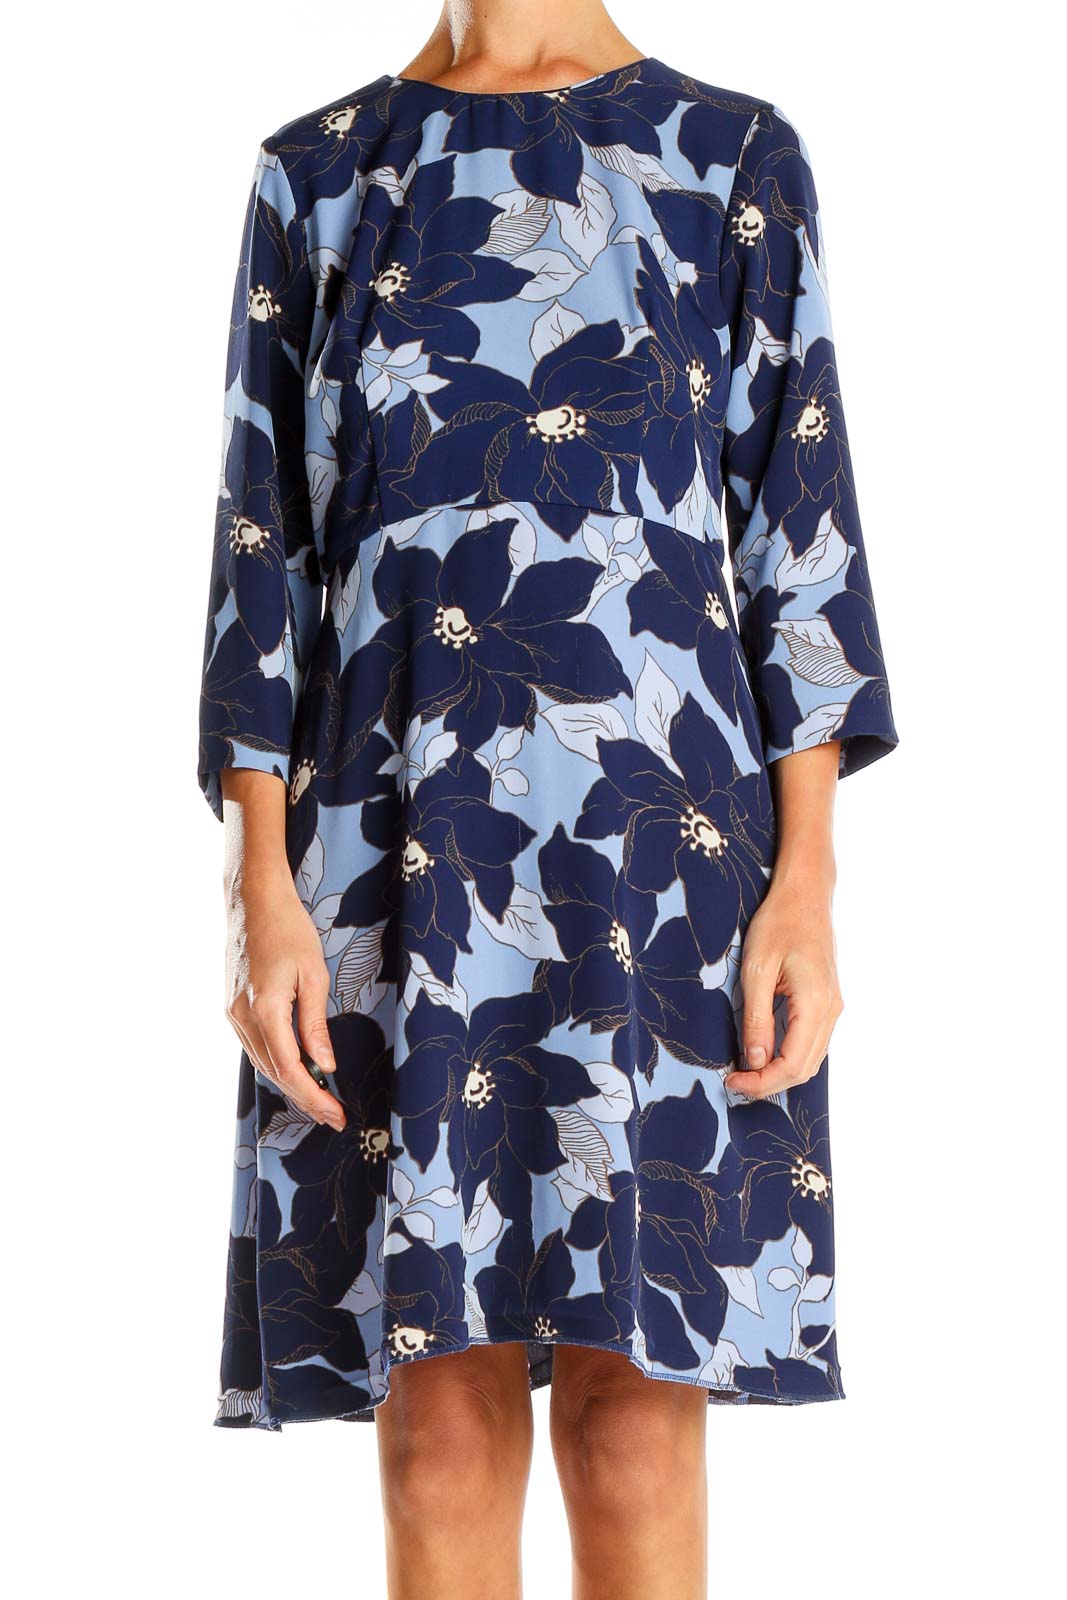 Blue Floral Print Shift Dress Front